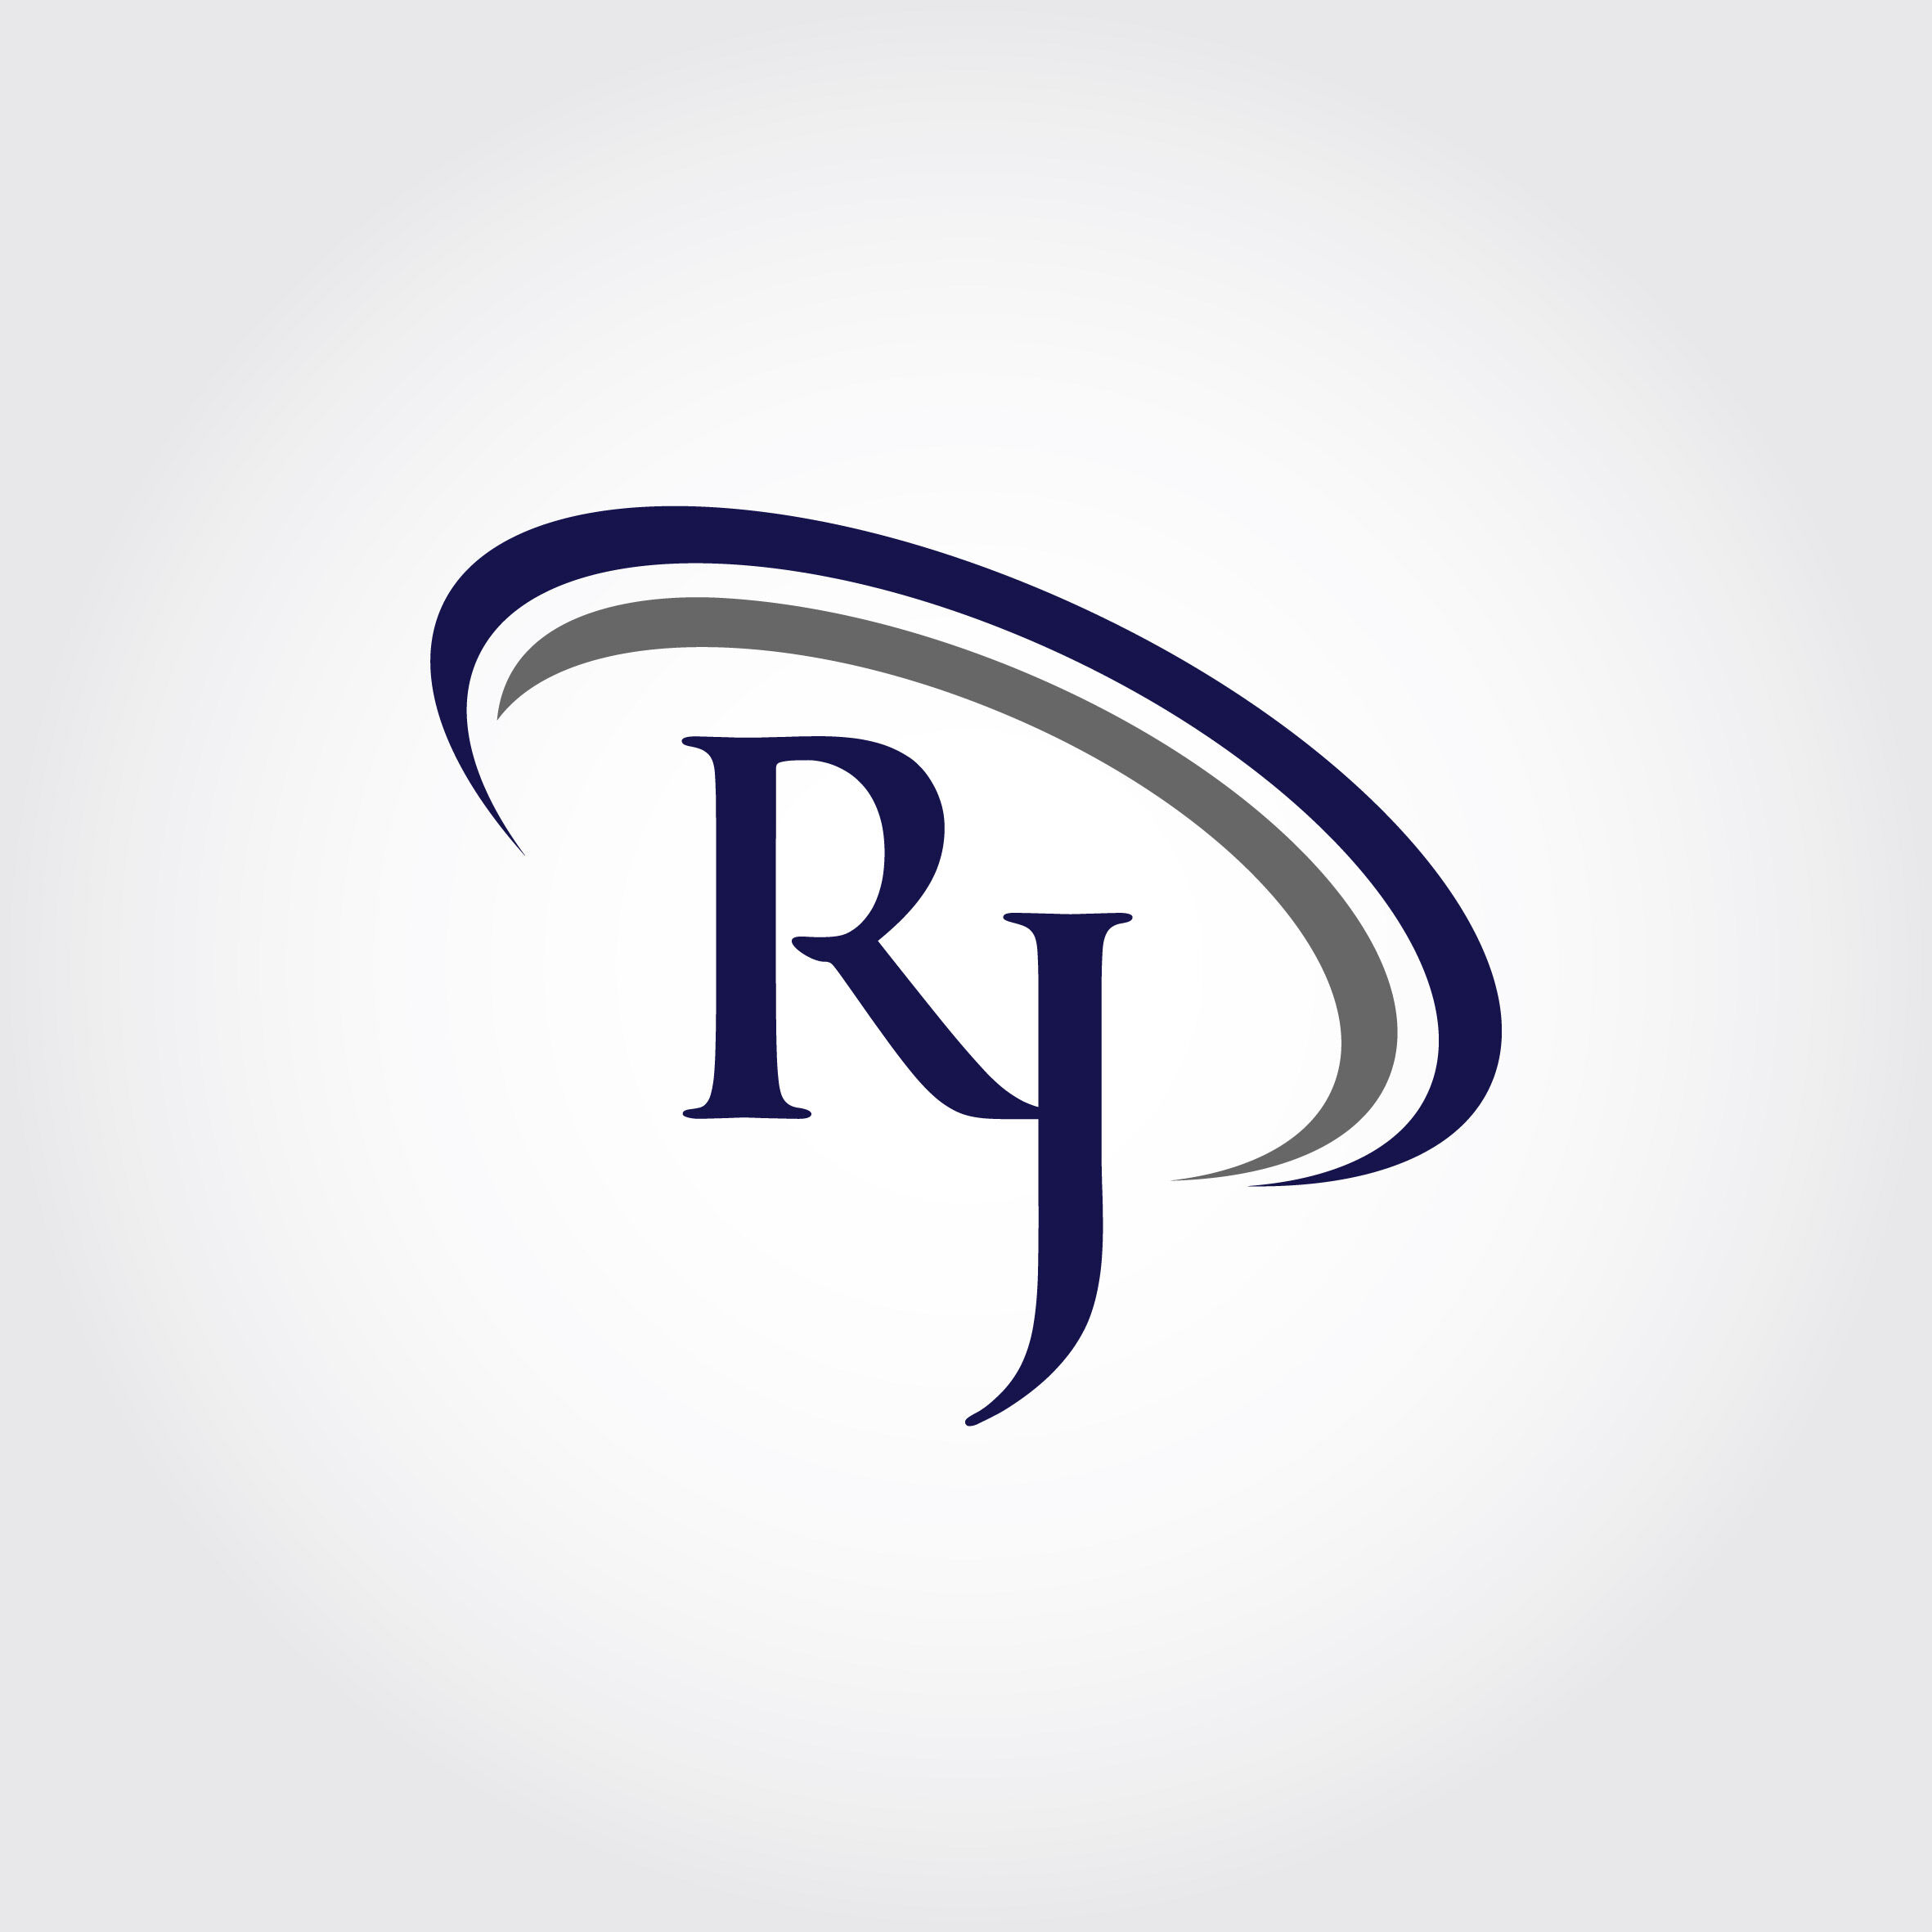 monogram-rj-logo-design-by-vectorseller-thehungryjpeg